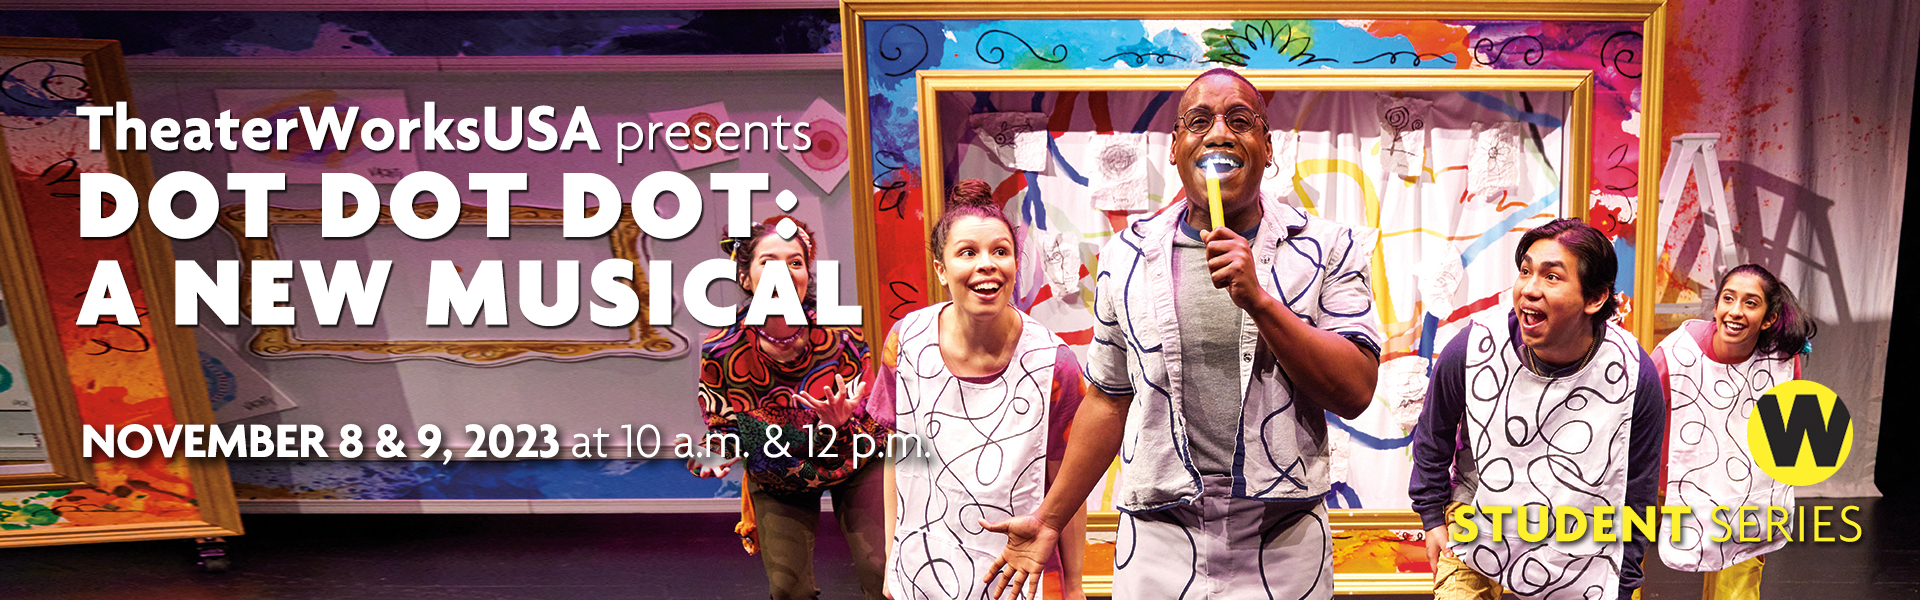 TheaterWorksUSA presents DOT DOT DOT: A New Musical, November 8 & 9 at 10 AM & 12 PM